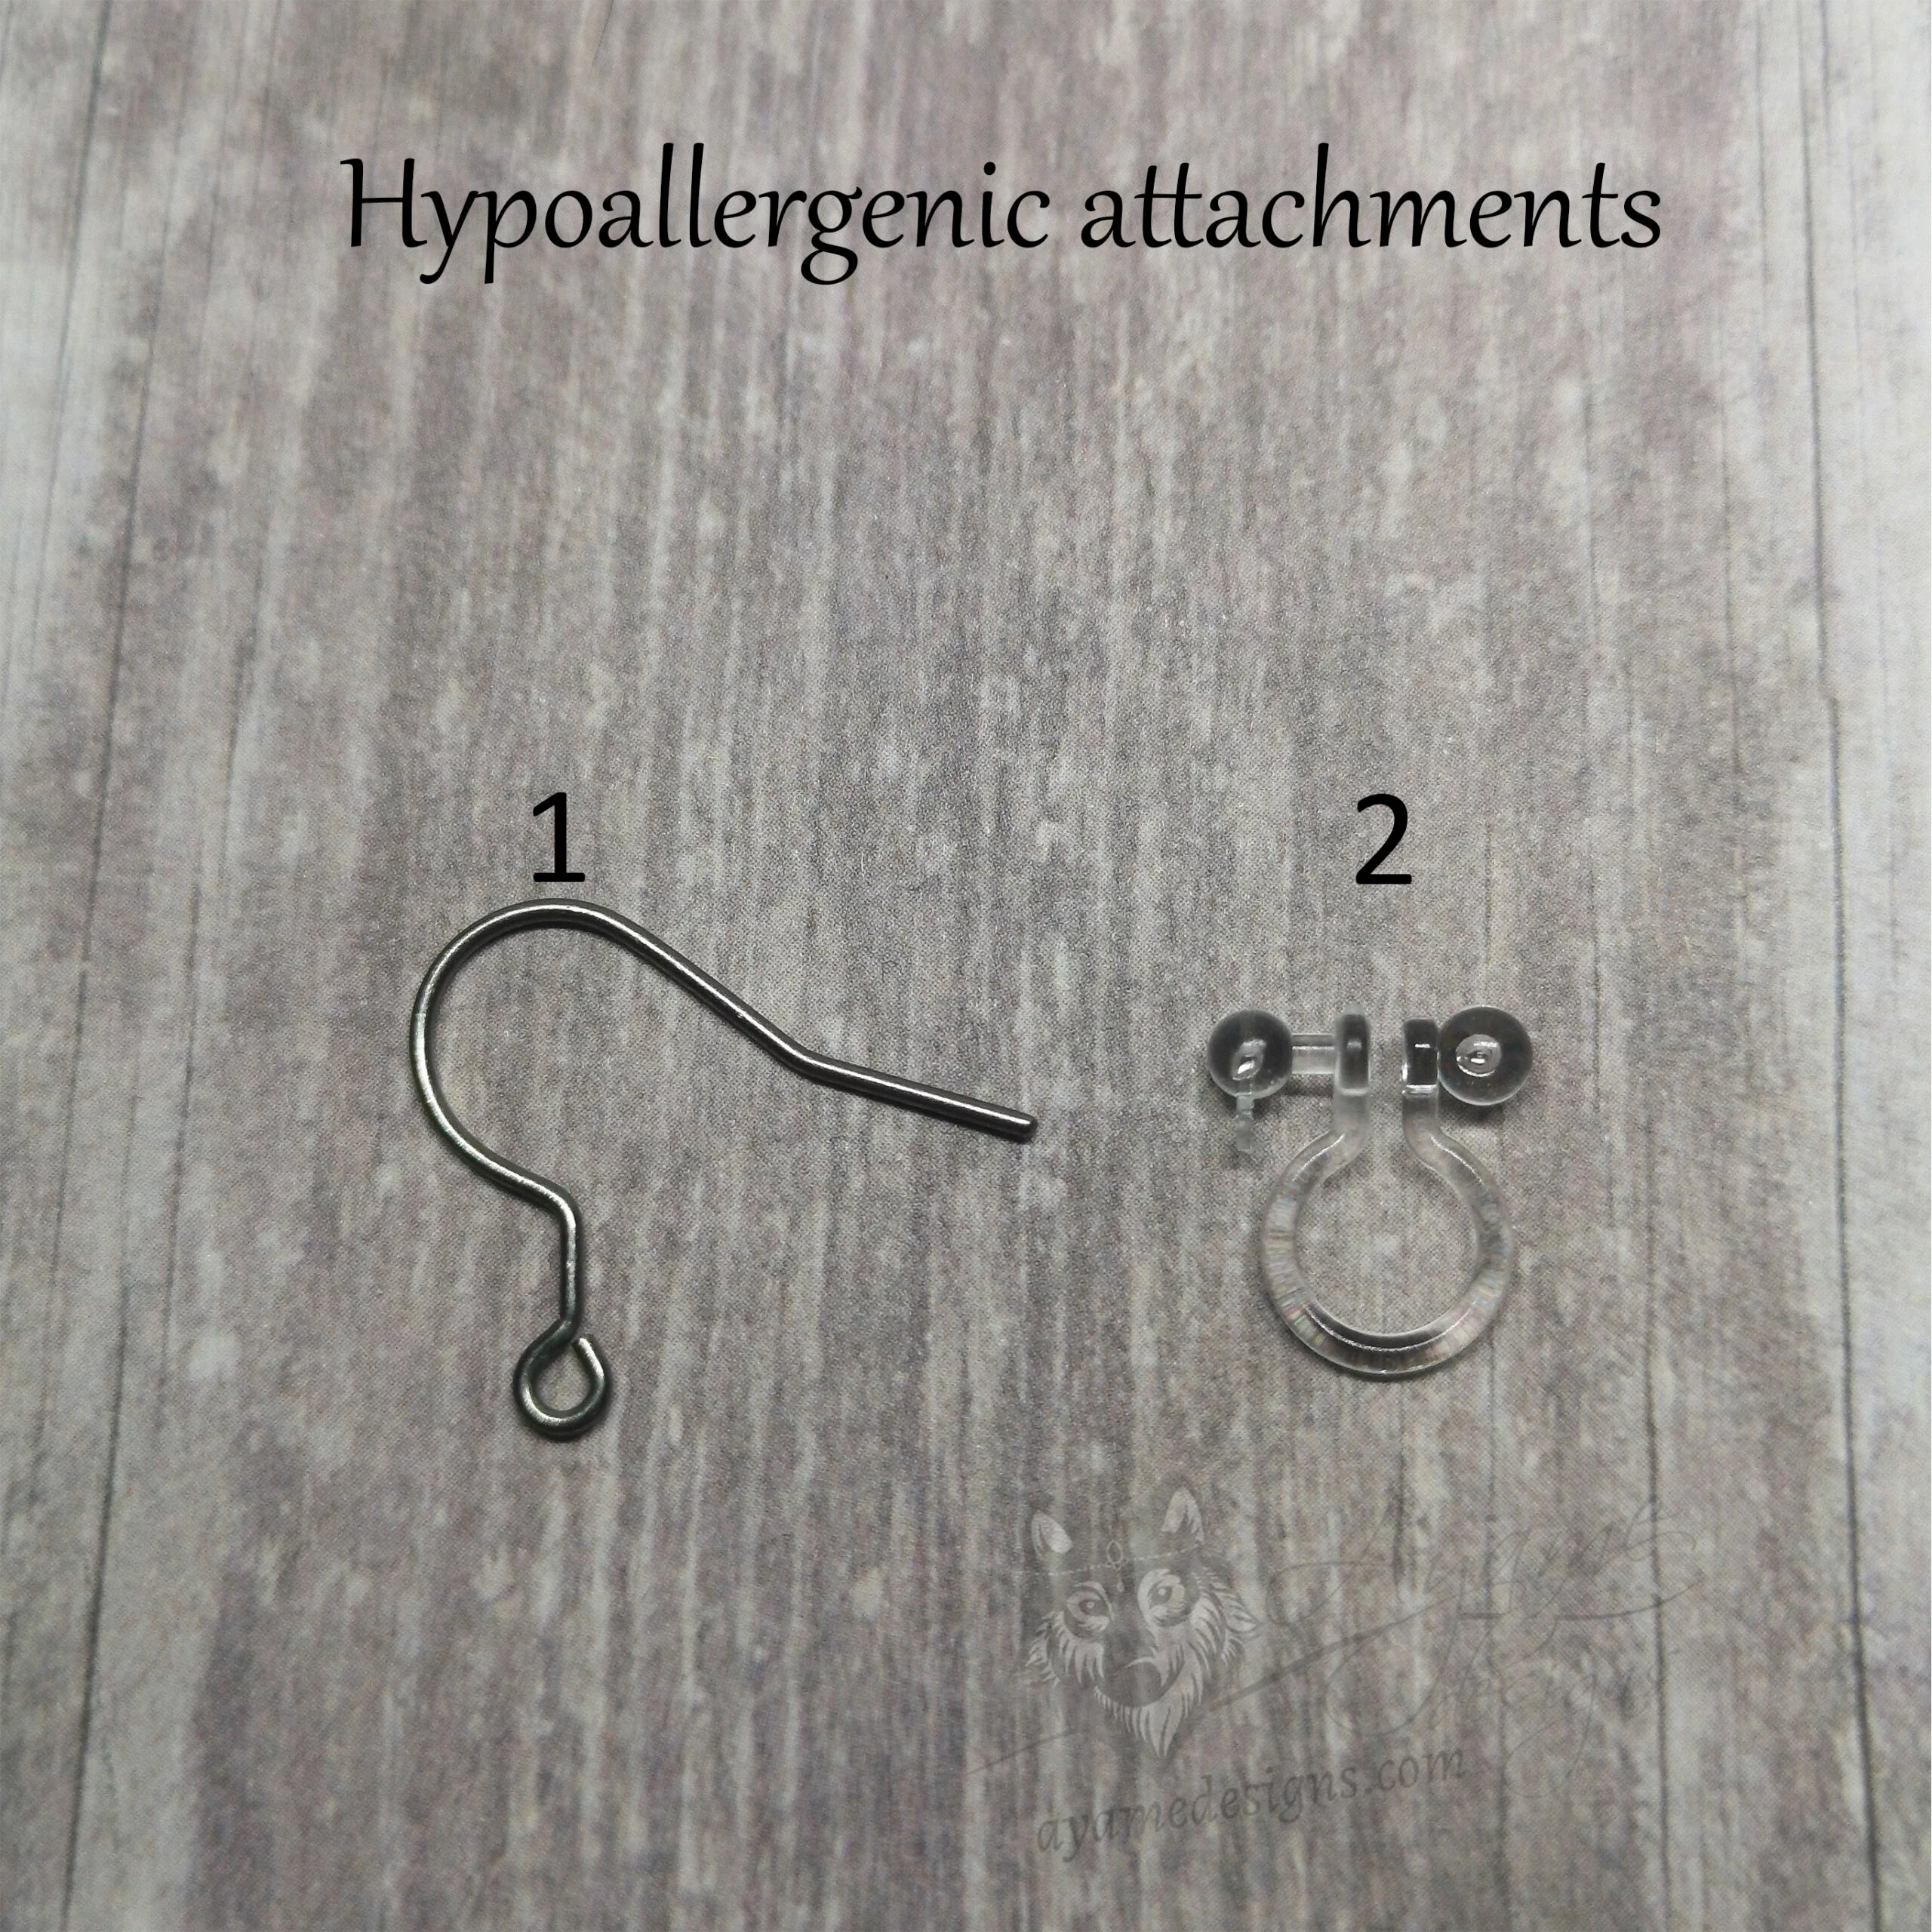 Wholesale Black Hypoallergenic Earring Hooks for Jewelry Making